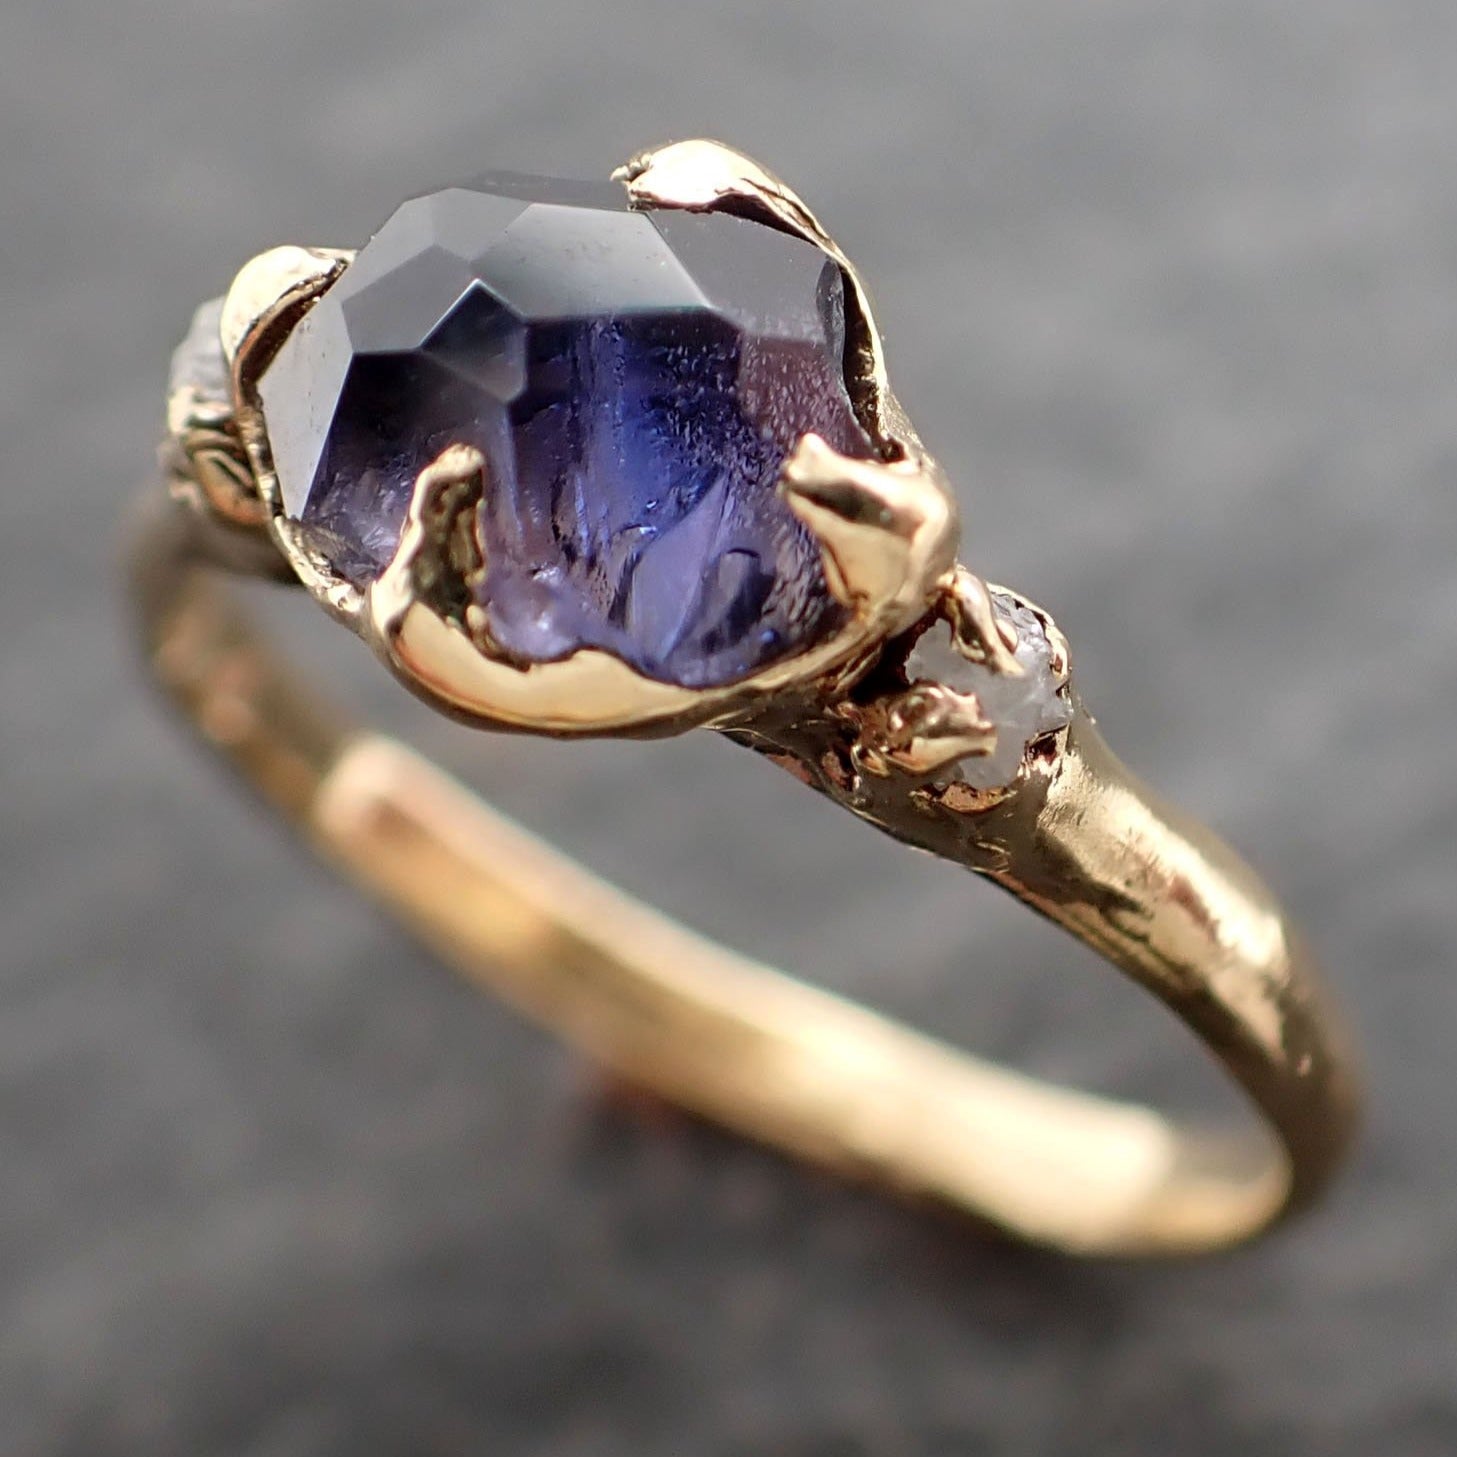 partially faceted montana sapphire rough diamond 18k yellow gold engagement wedding gemstone multi stone ring 2573 Alternative Engagement